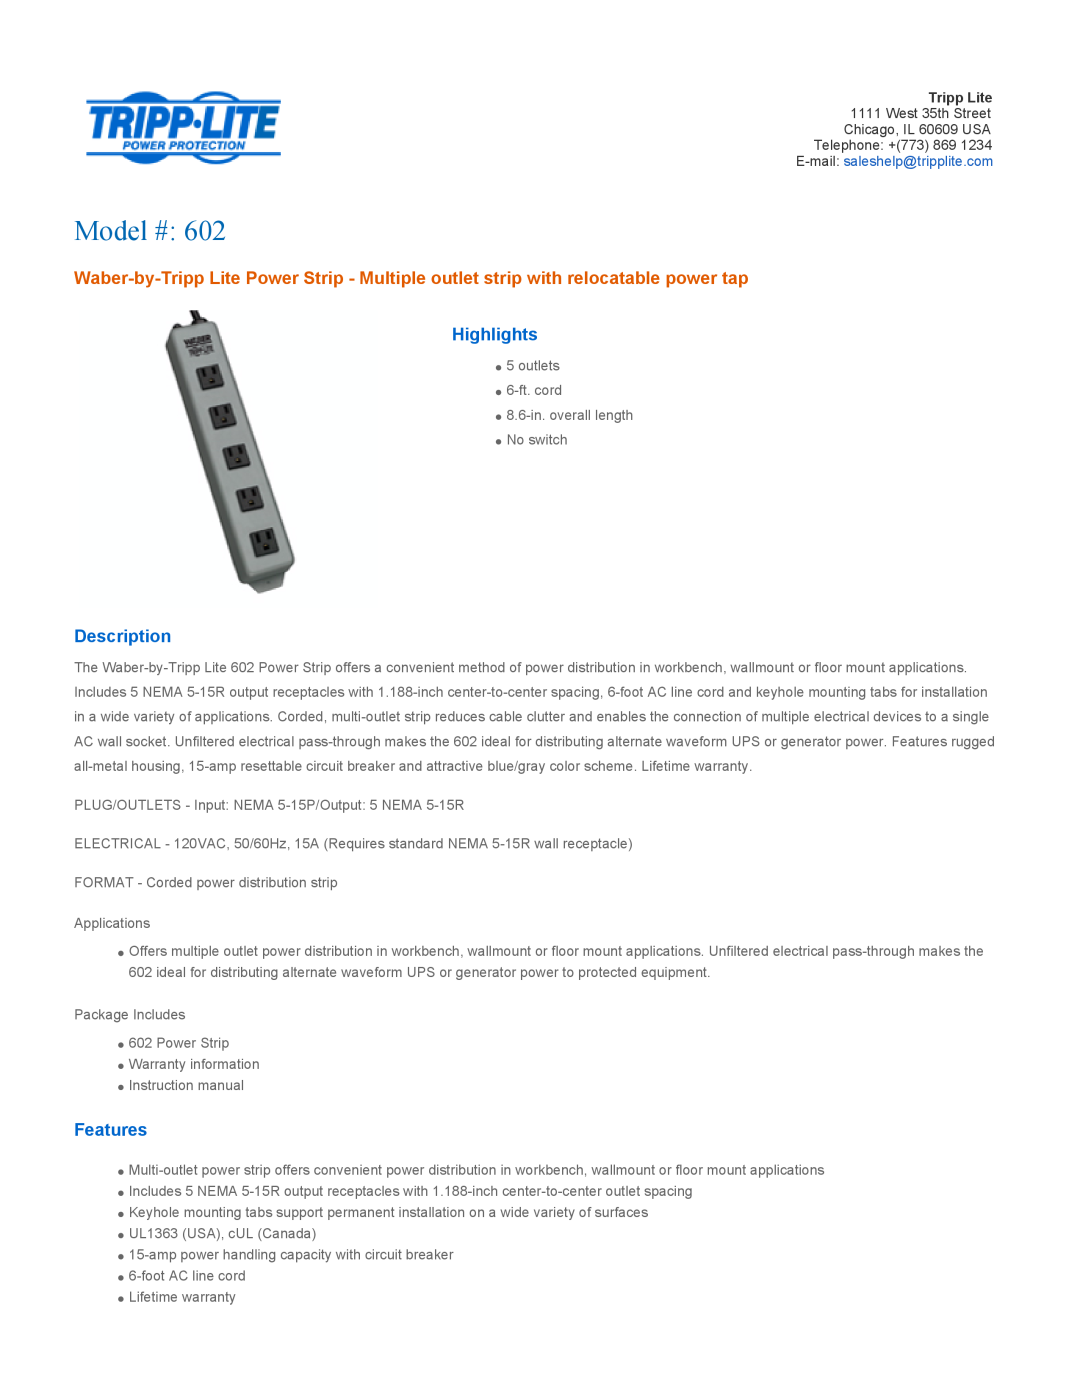 Tripp Lite 602 warranty Highlights, Description, Features, Model # 